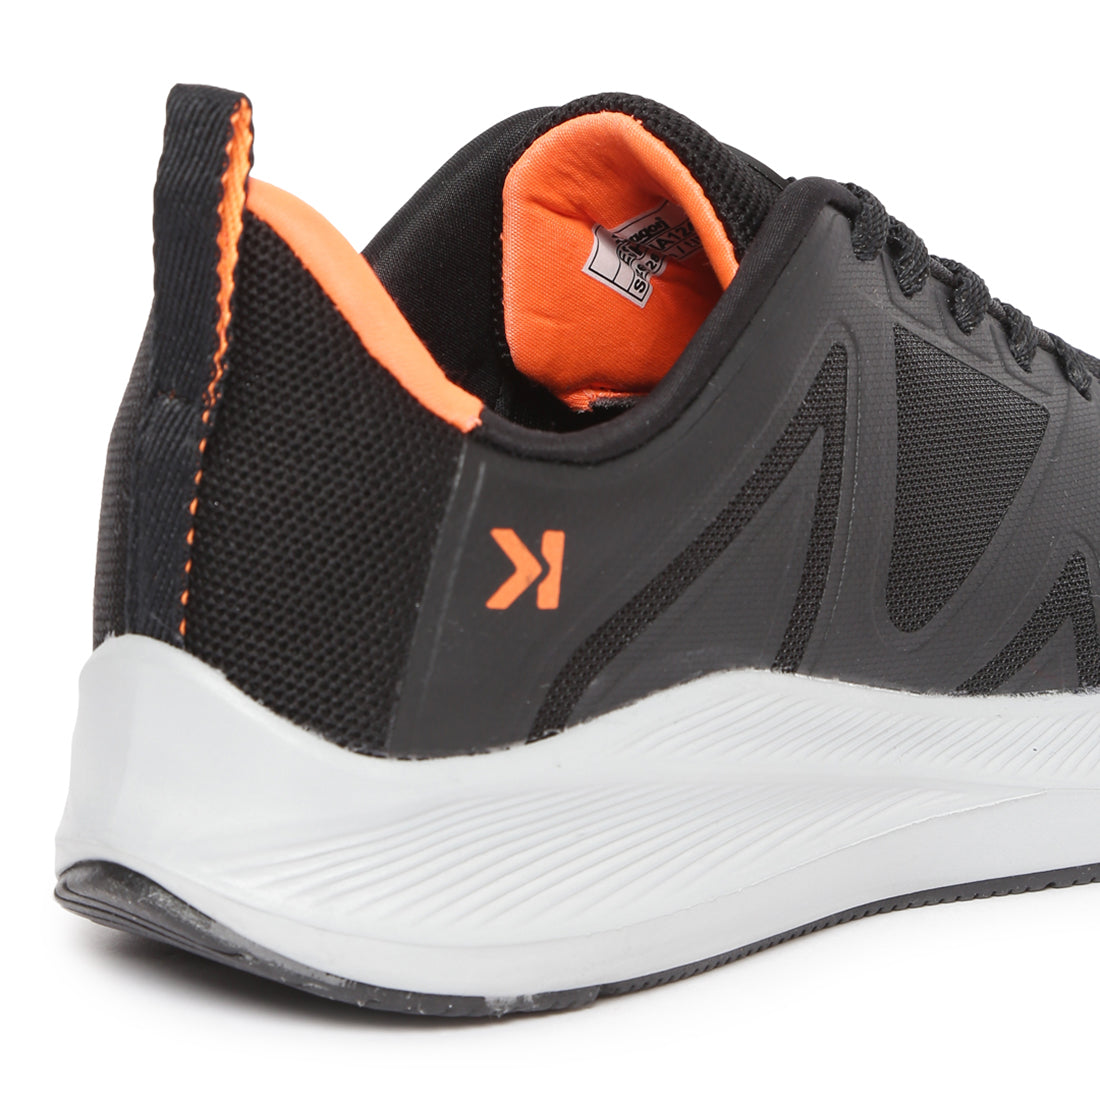 Eeken ESHGIA124 Black And Orange Athleisure Shoes For Men